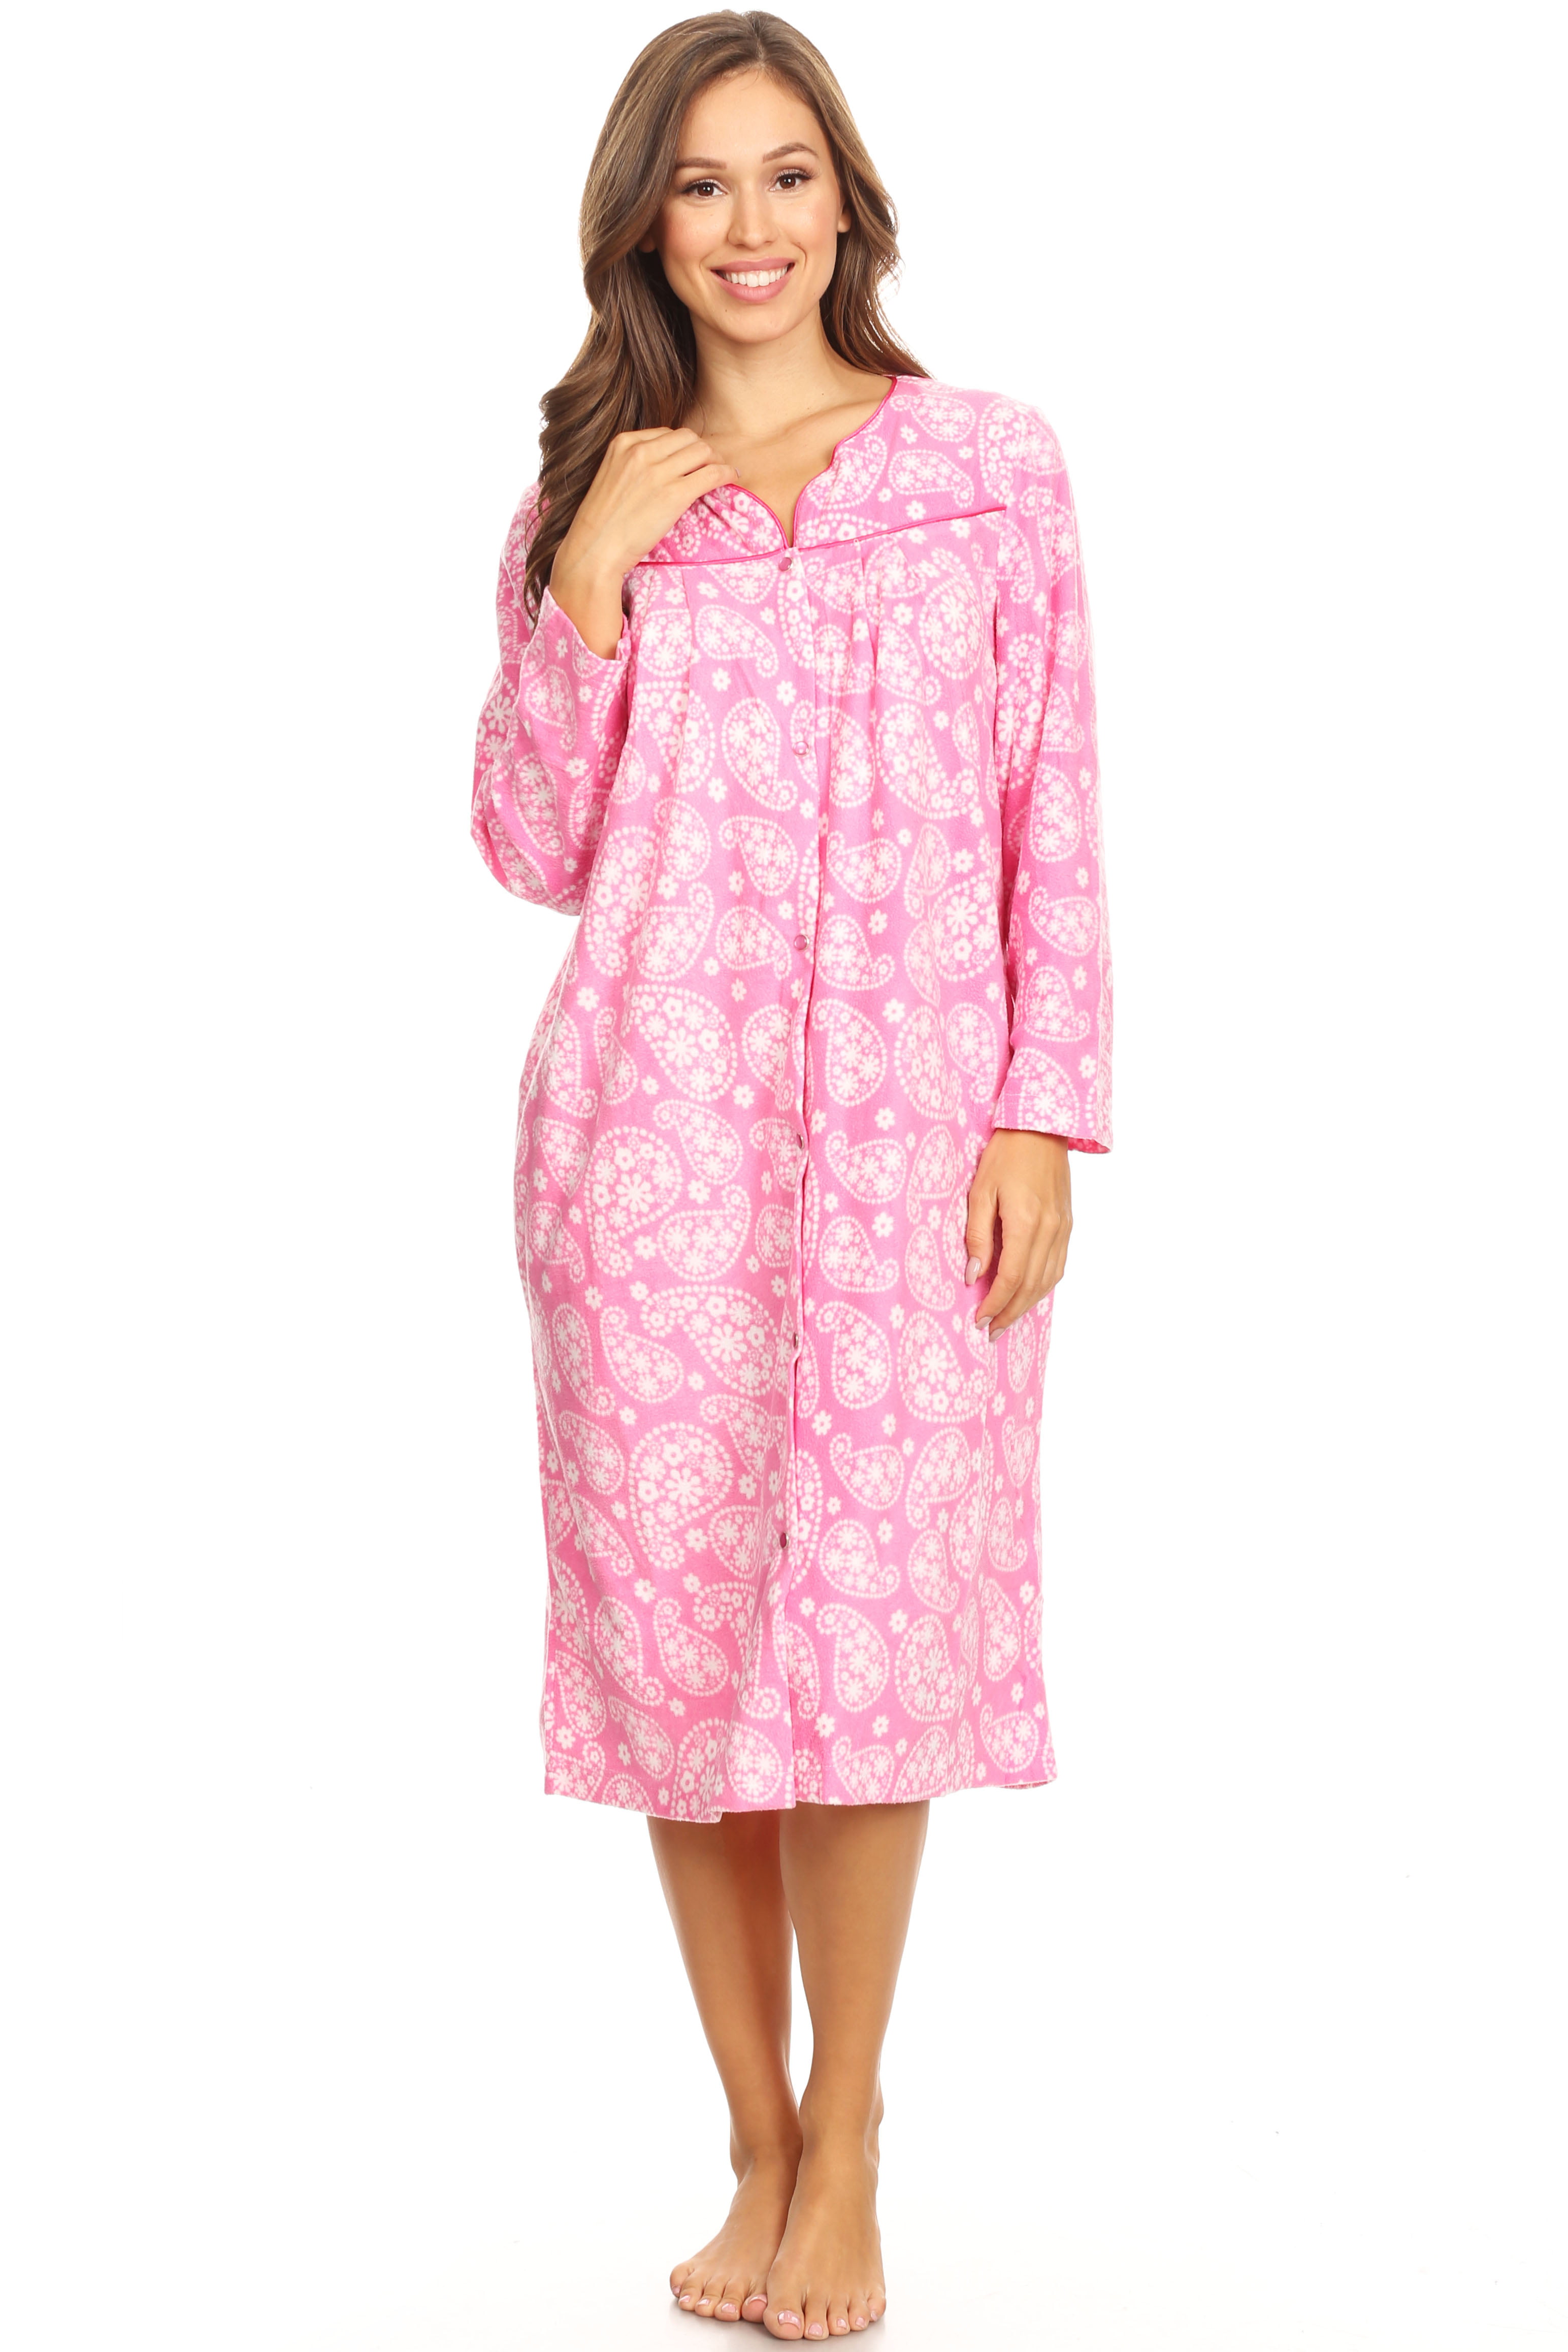 Lati Fashion - 4045 Fleece Womens Nightgown Sleepwear Pajamas Woman ...